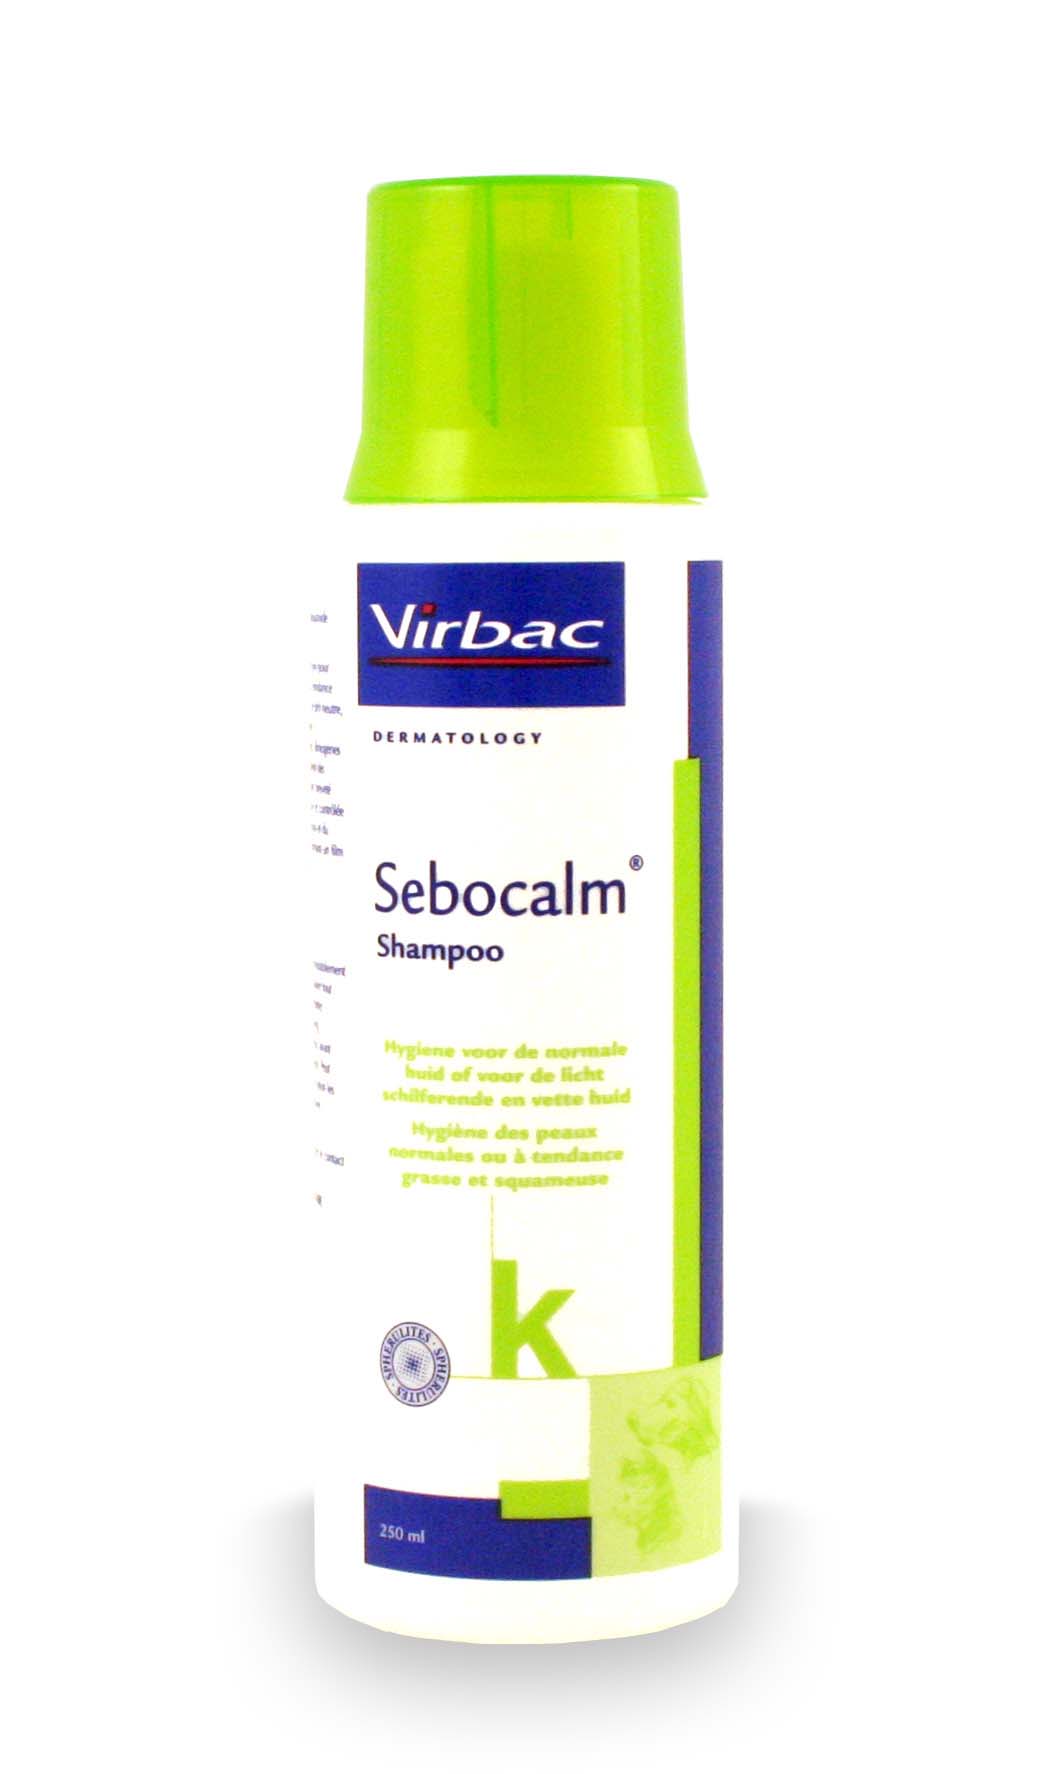 Sebocalm Shampoo - Virbac - 250ml